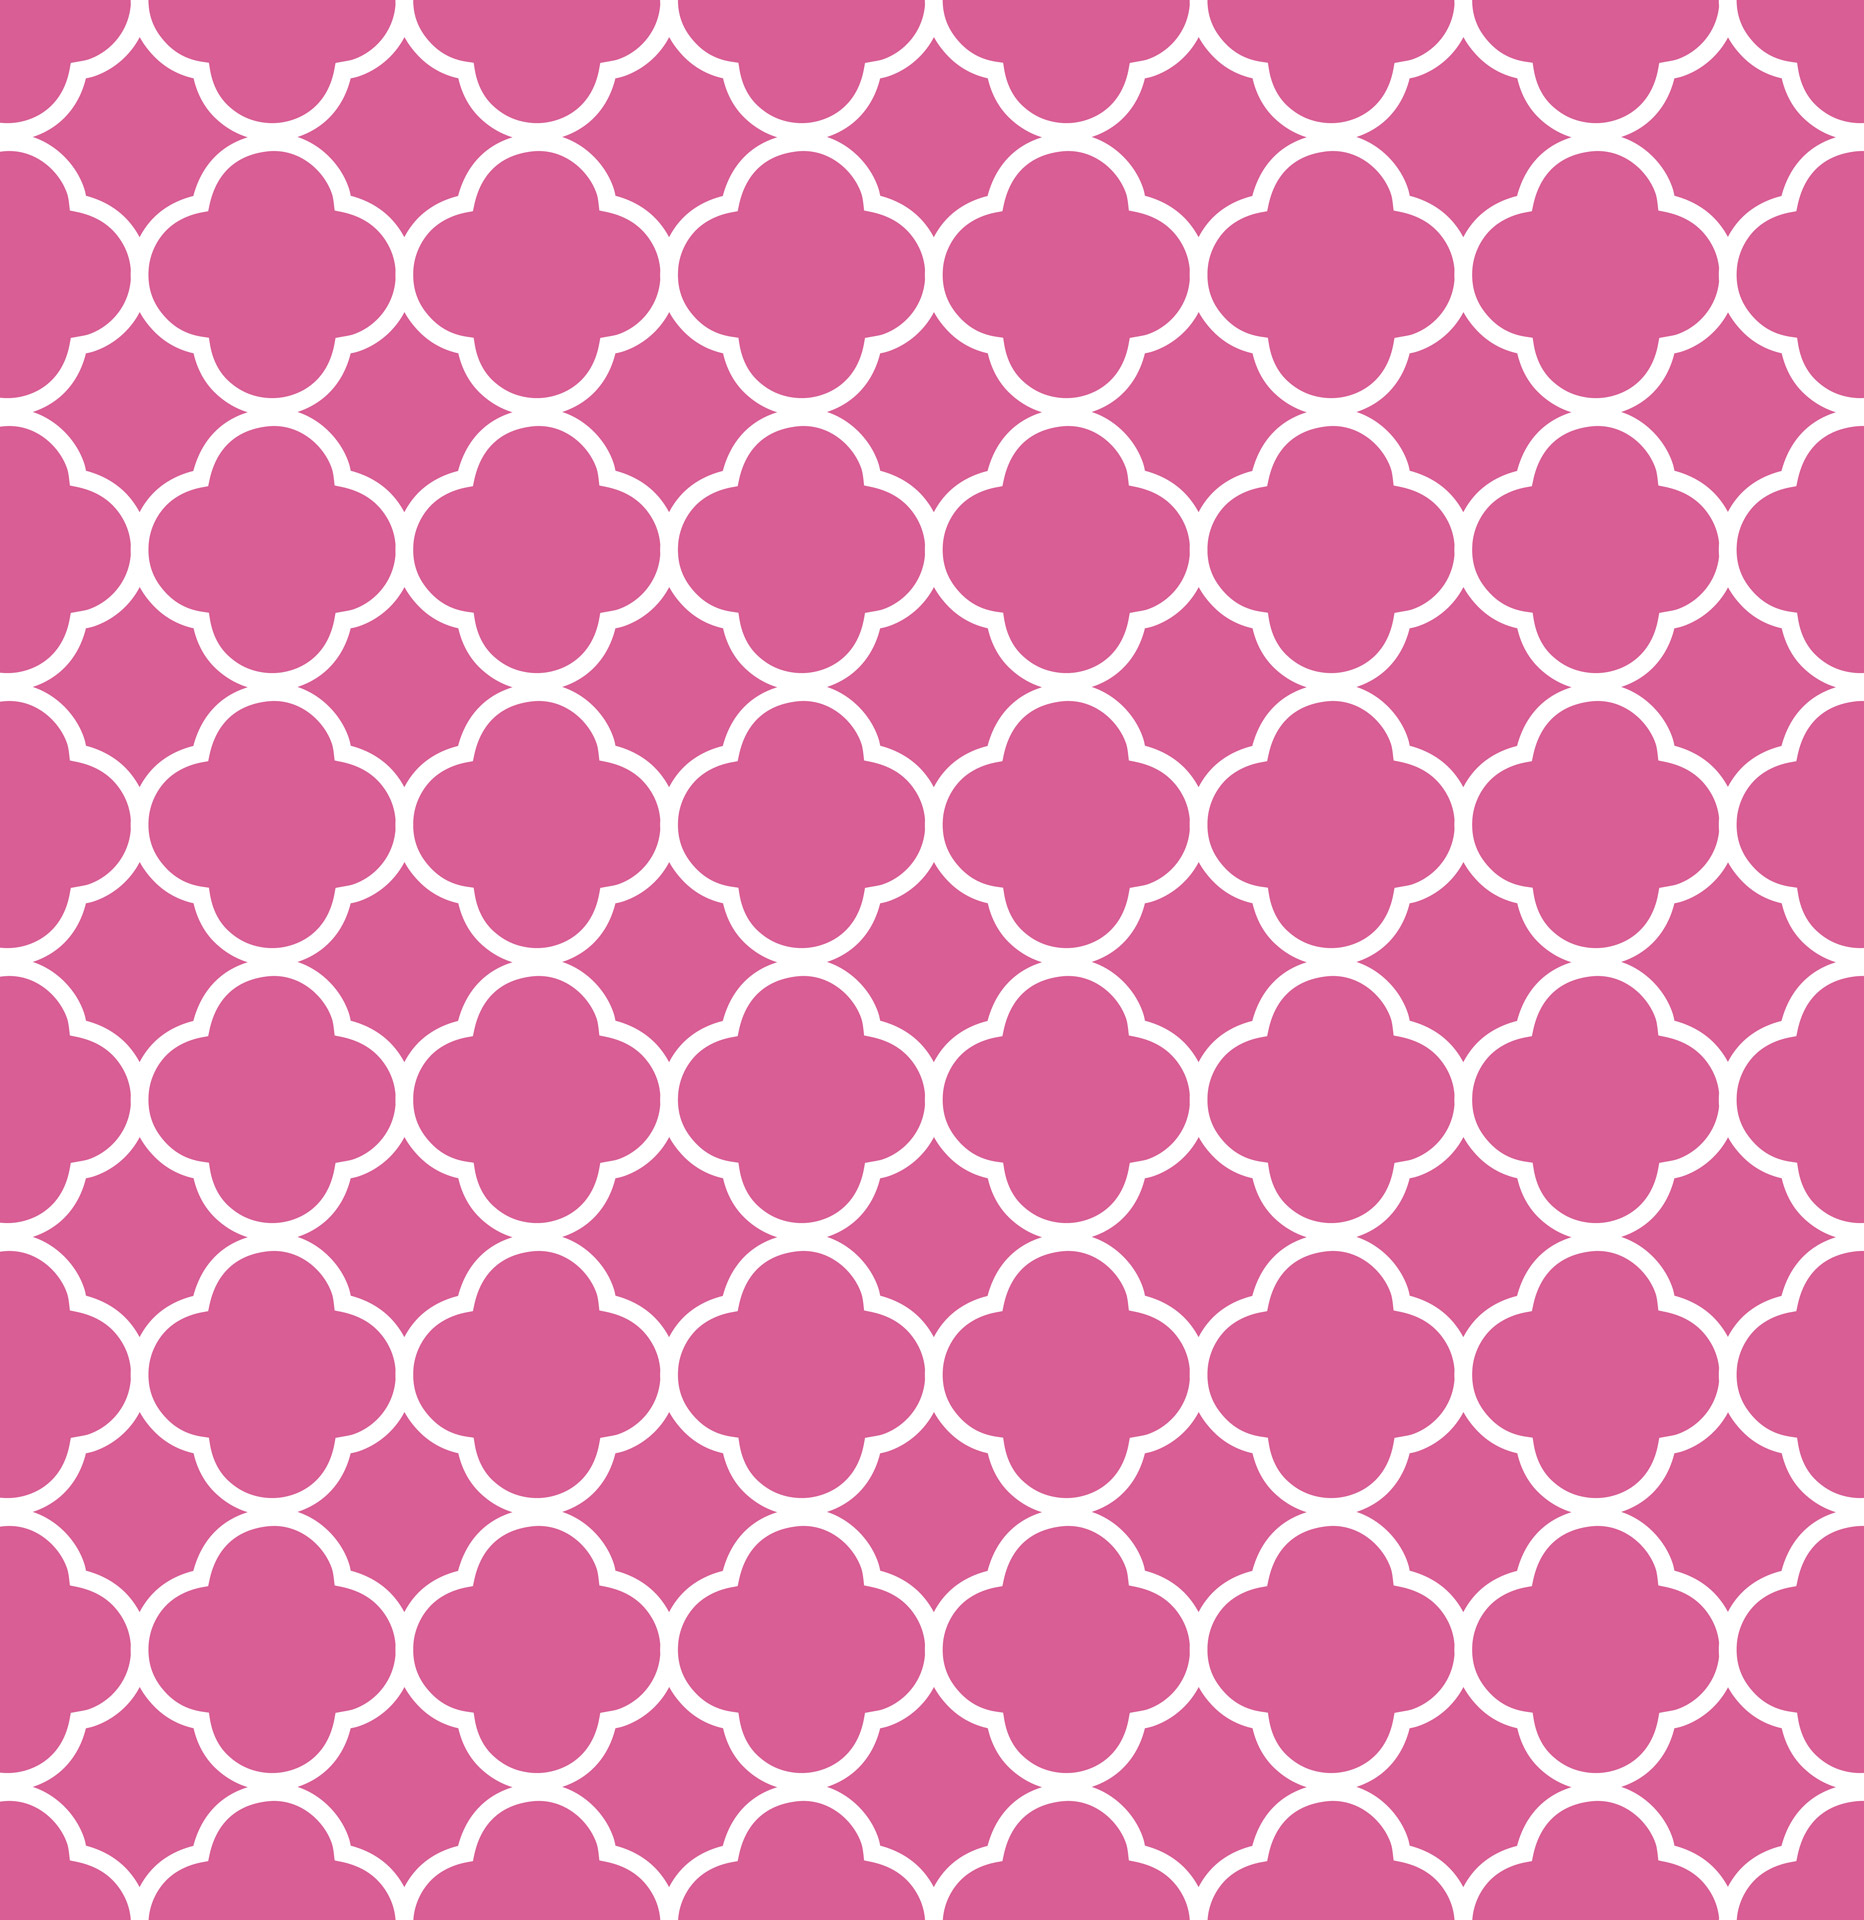 Quatrefoil Pattern Background Pink